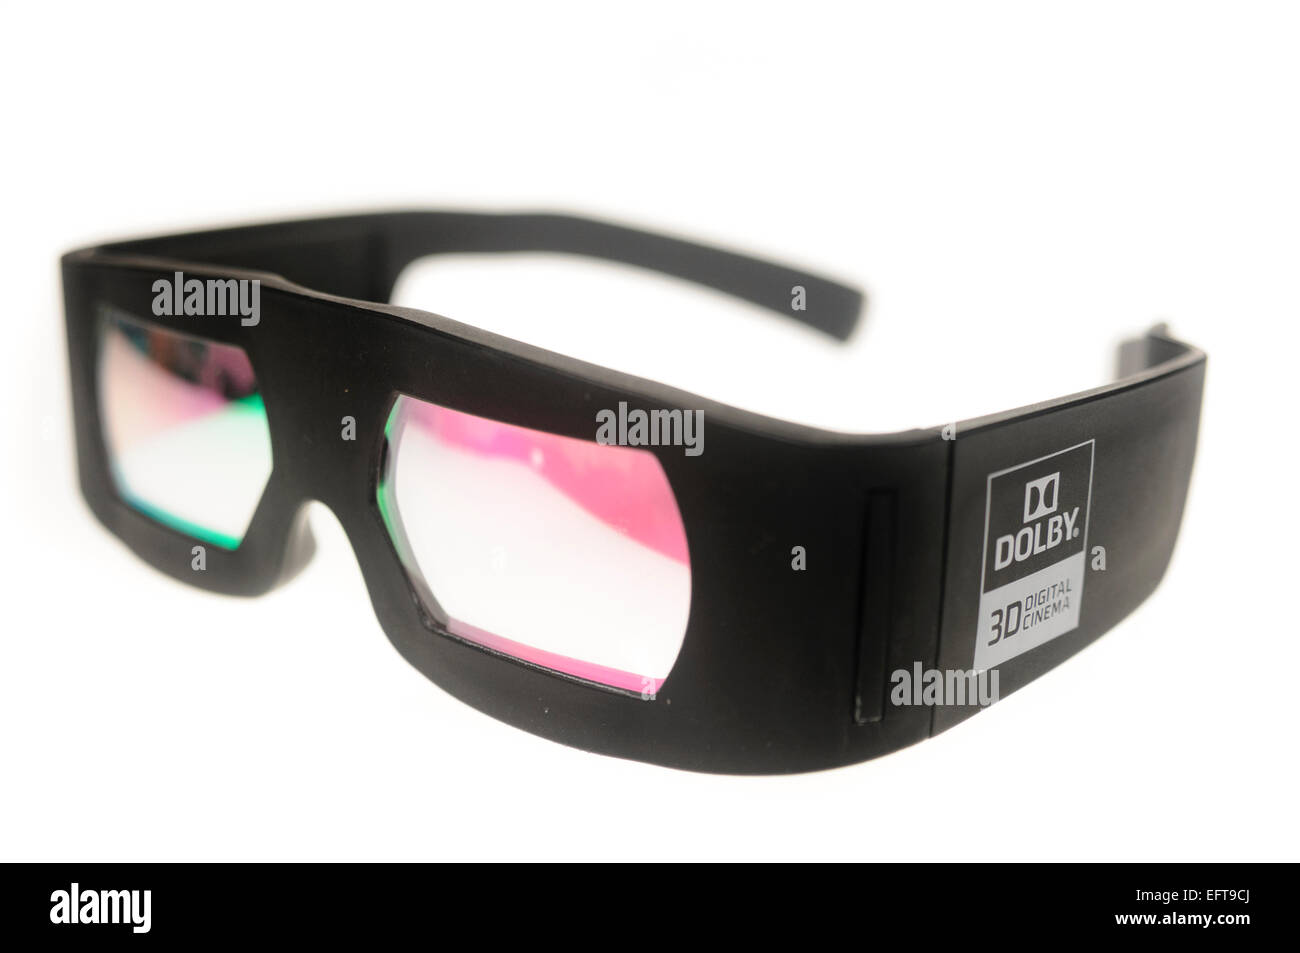 Dolby Digital Cinema 3D glasses Stock Photo - Alamy